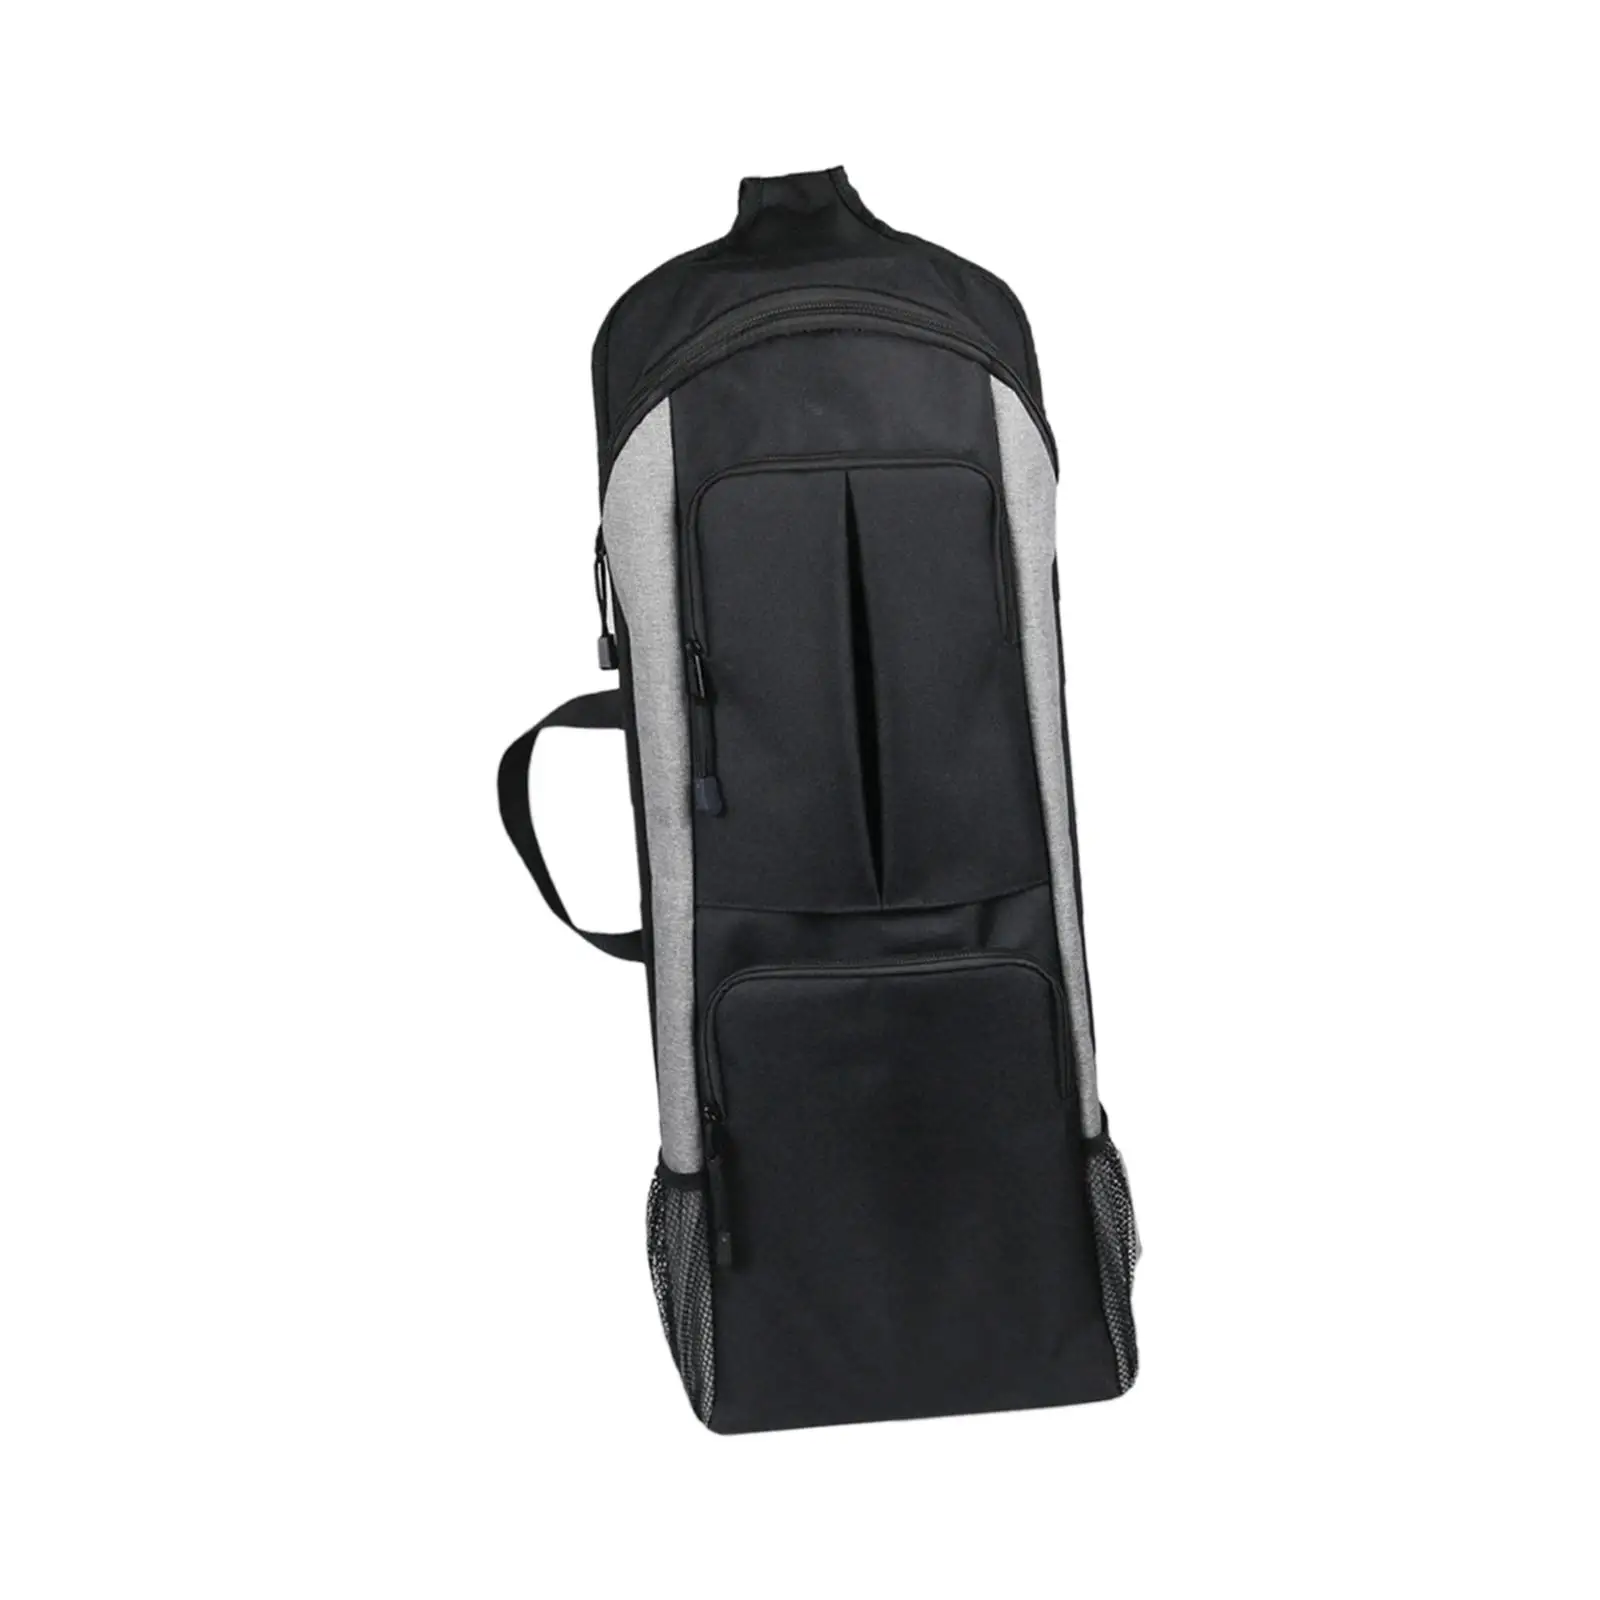 Portable Gym Bag Travel Duffel Bag Adjustable Strap Workout Tote Handbag Large for Workout Weekend Camping Yoga Swimming